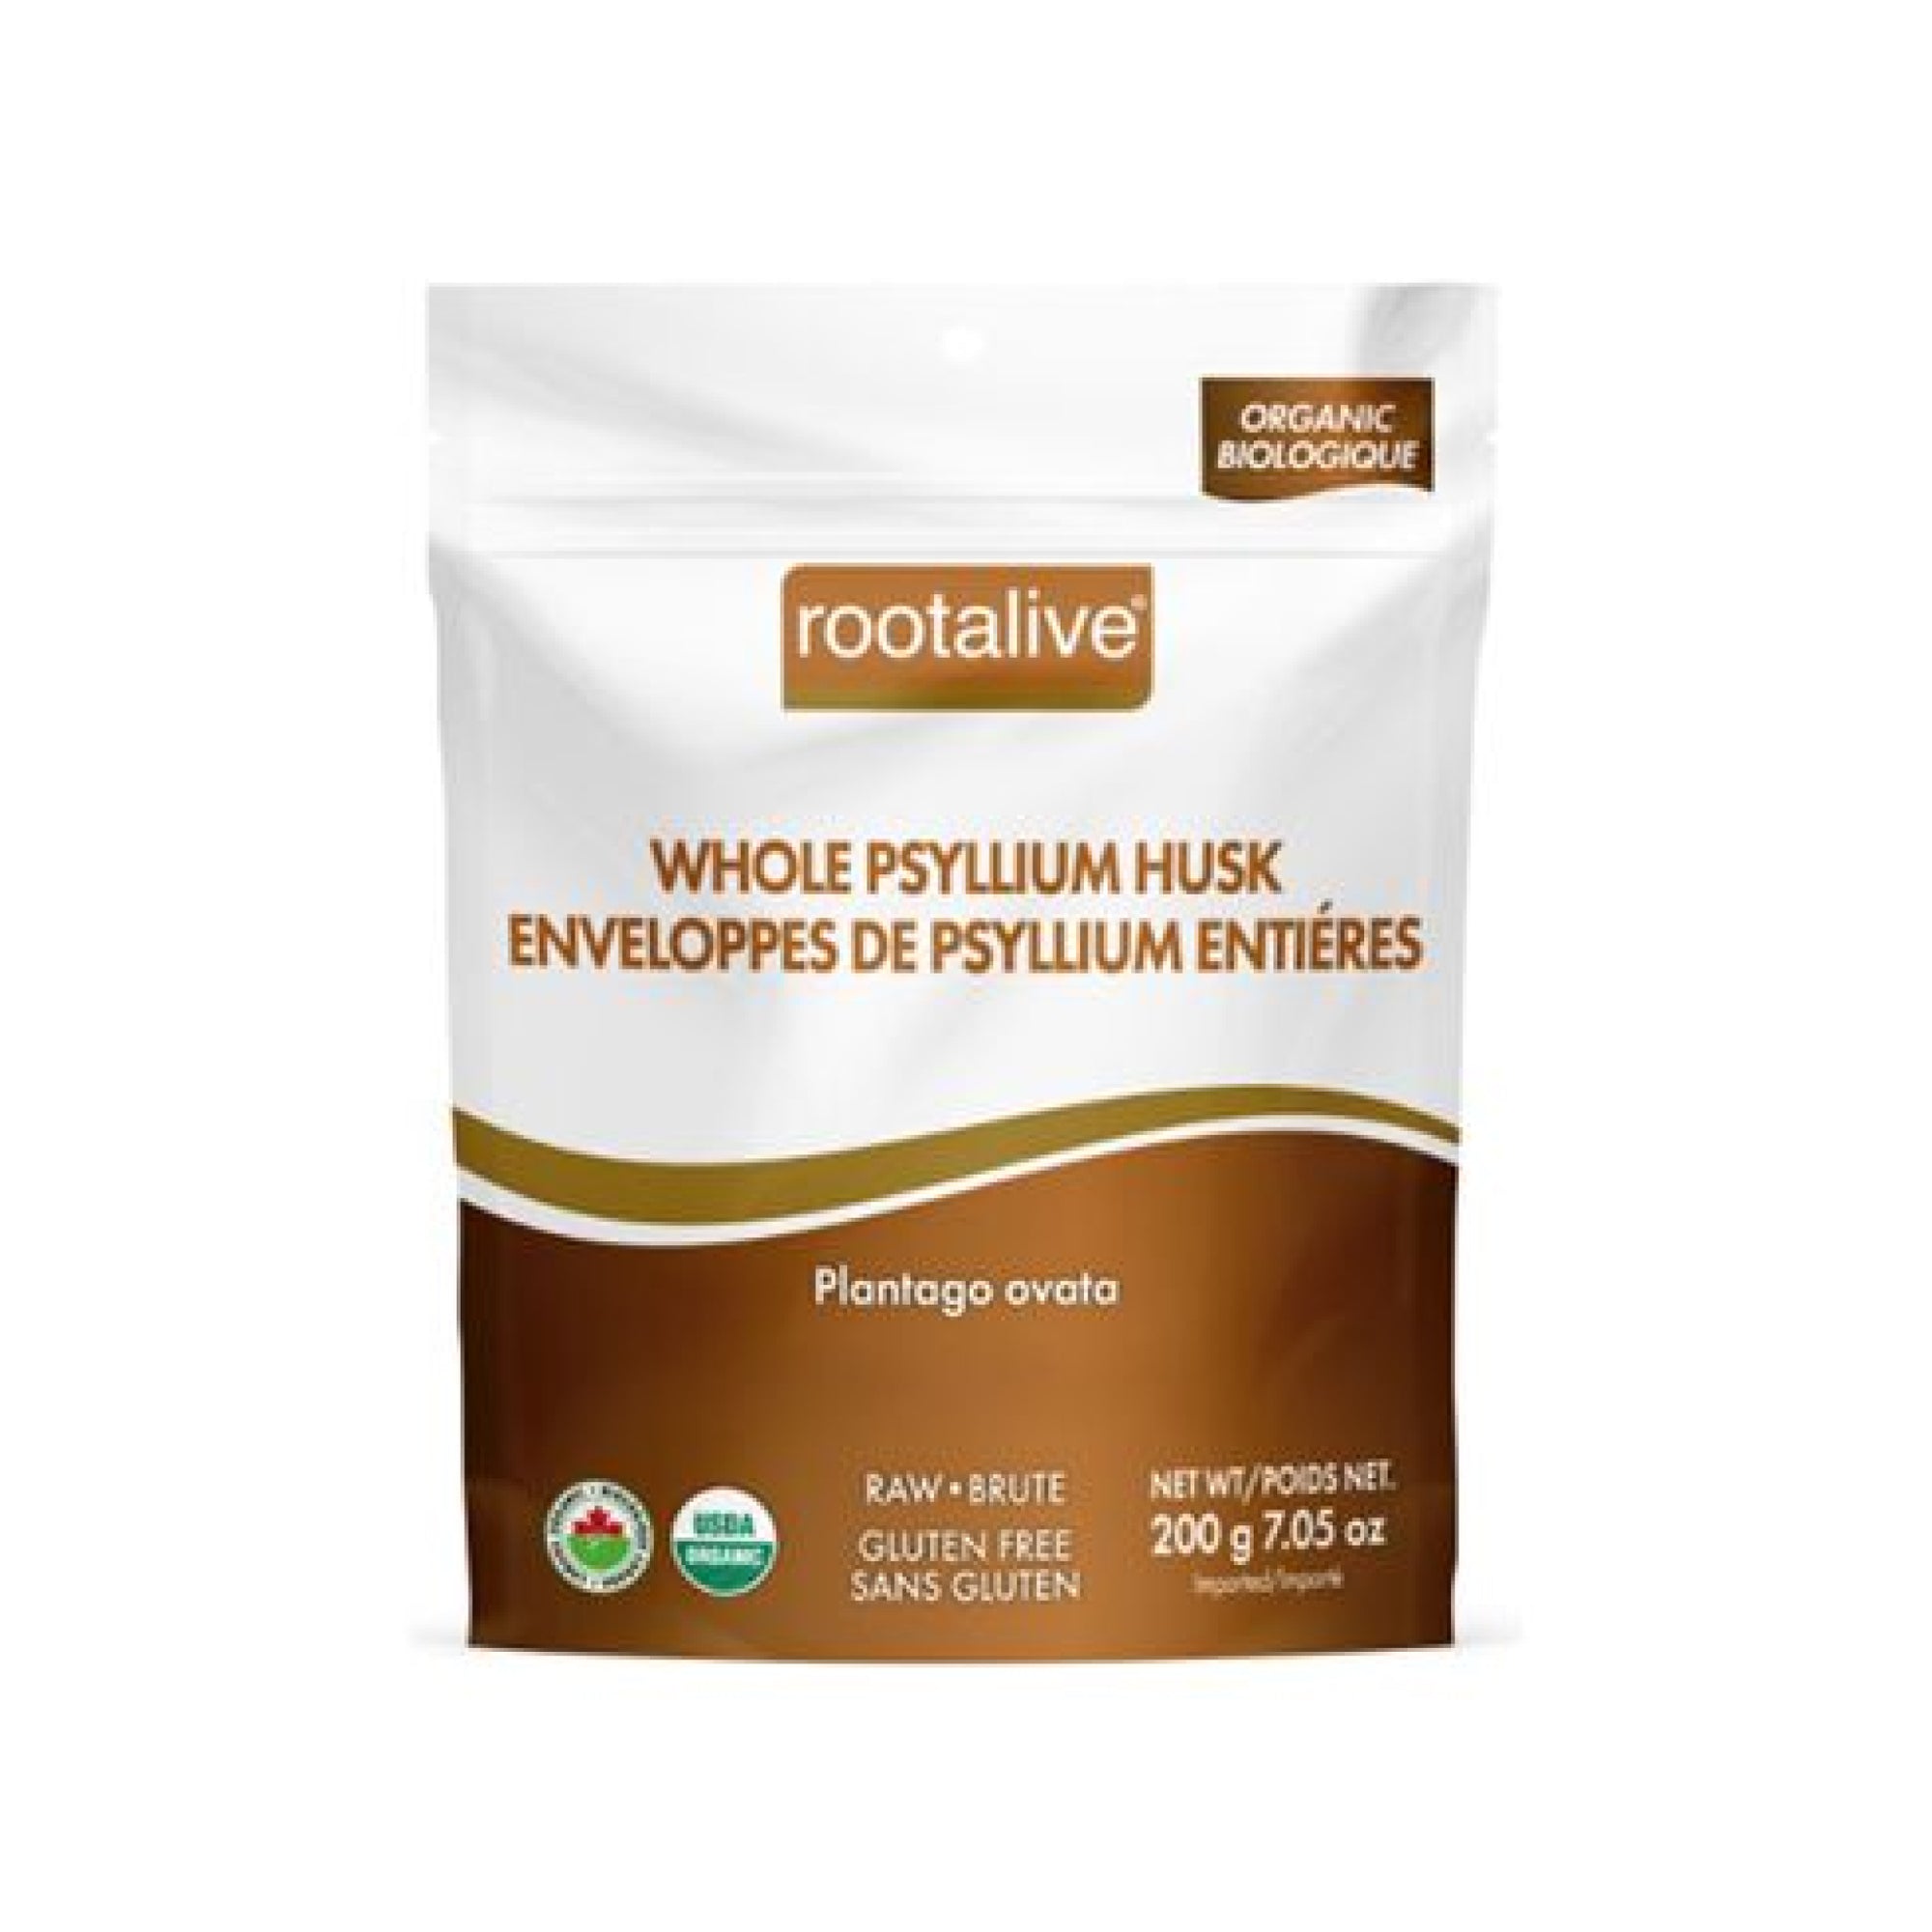 Rootalive Organic Whole Psyllium Husk 200g